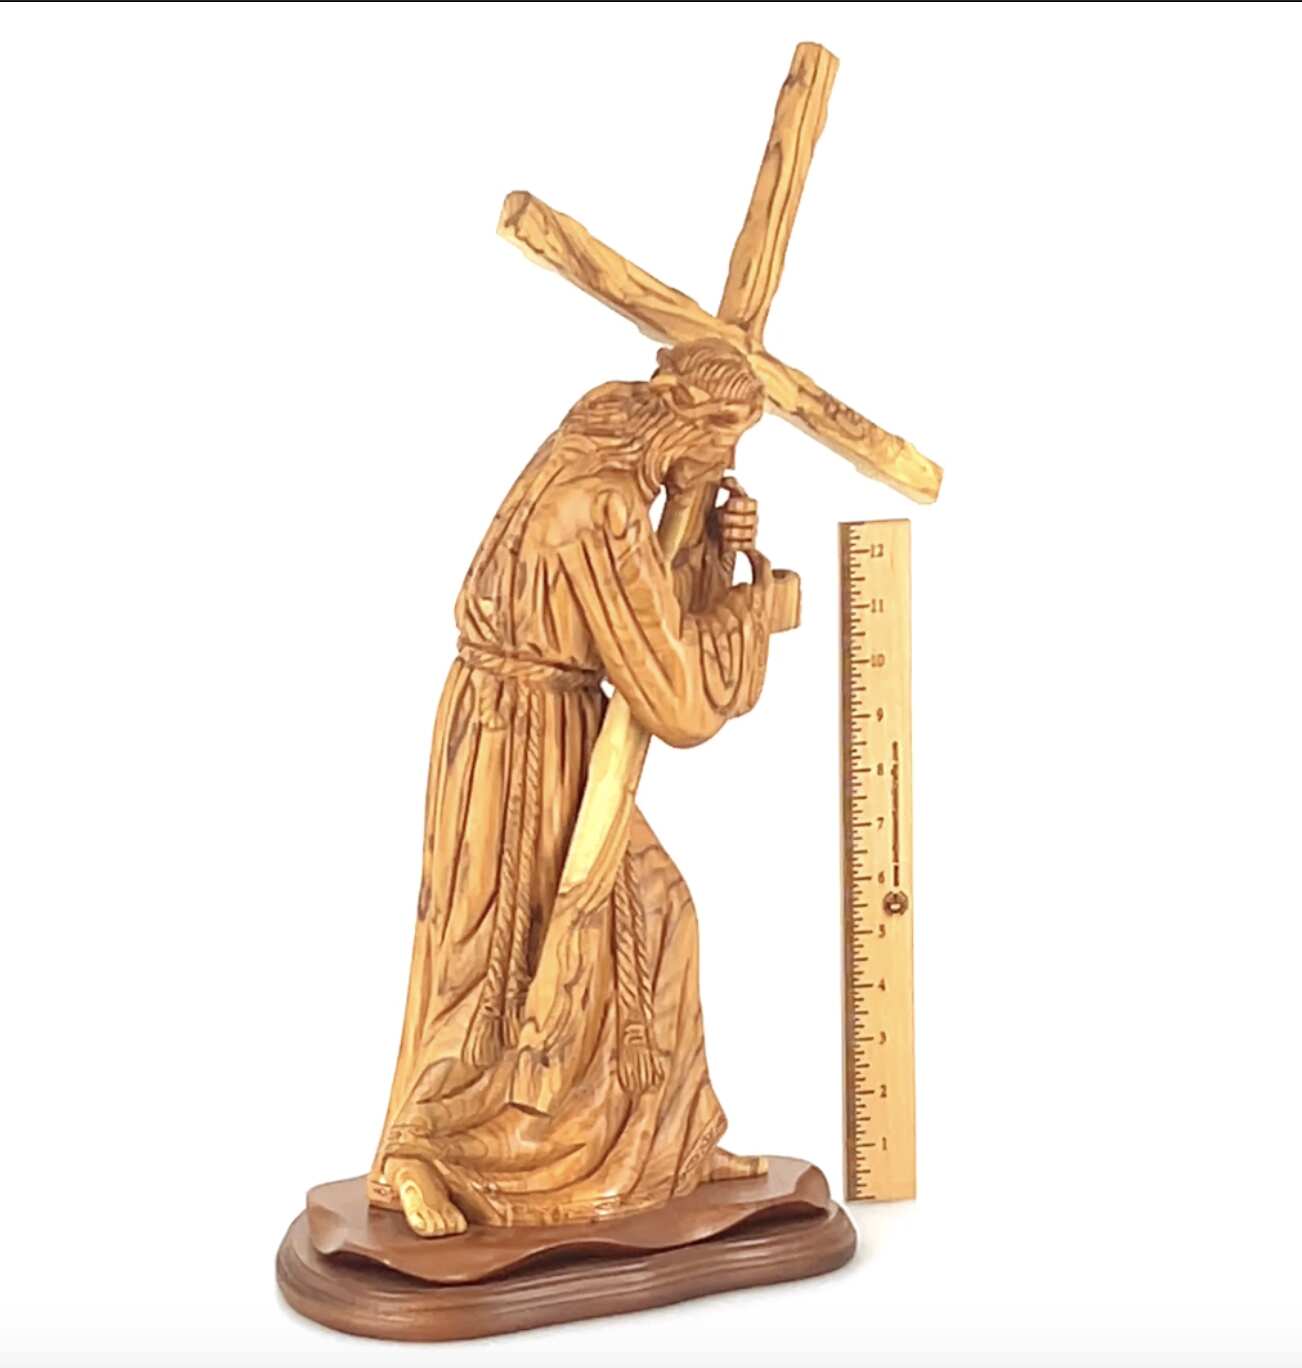 Jesus Christ "Holding Cross" Wooden Sculpture 16.9"